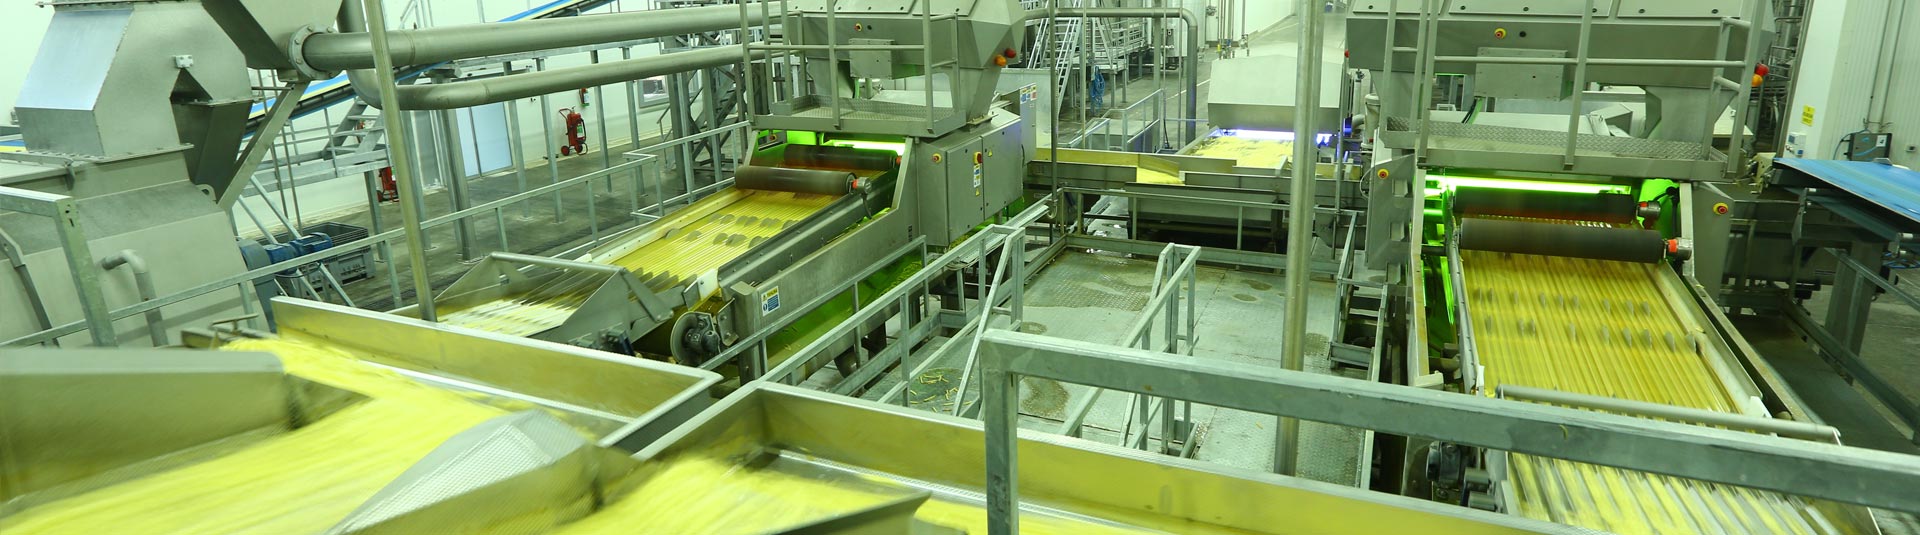 Dondurulmuş Parmak Patates Üretim Tesisi